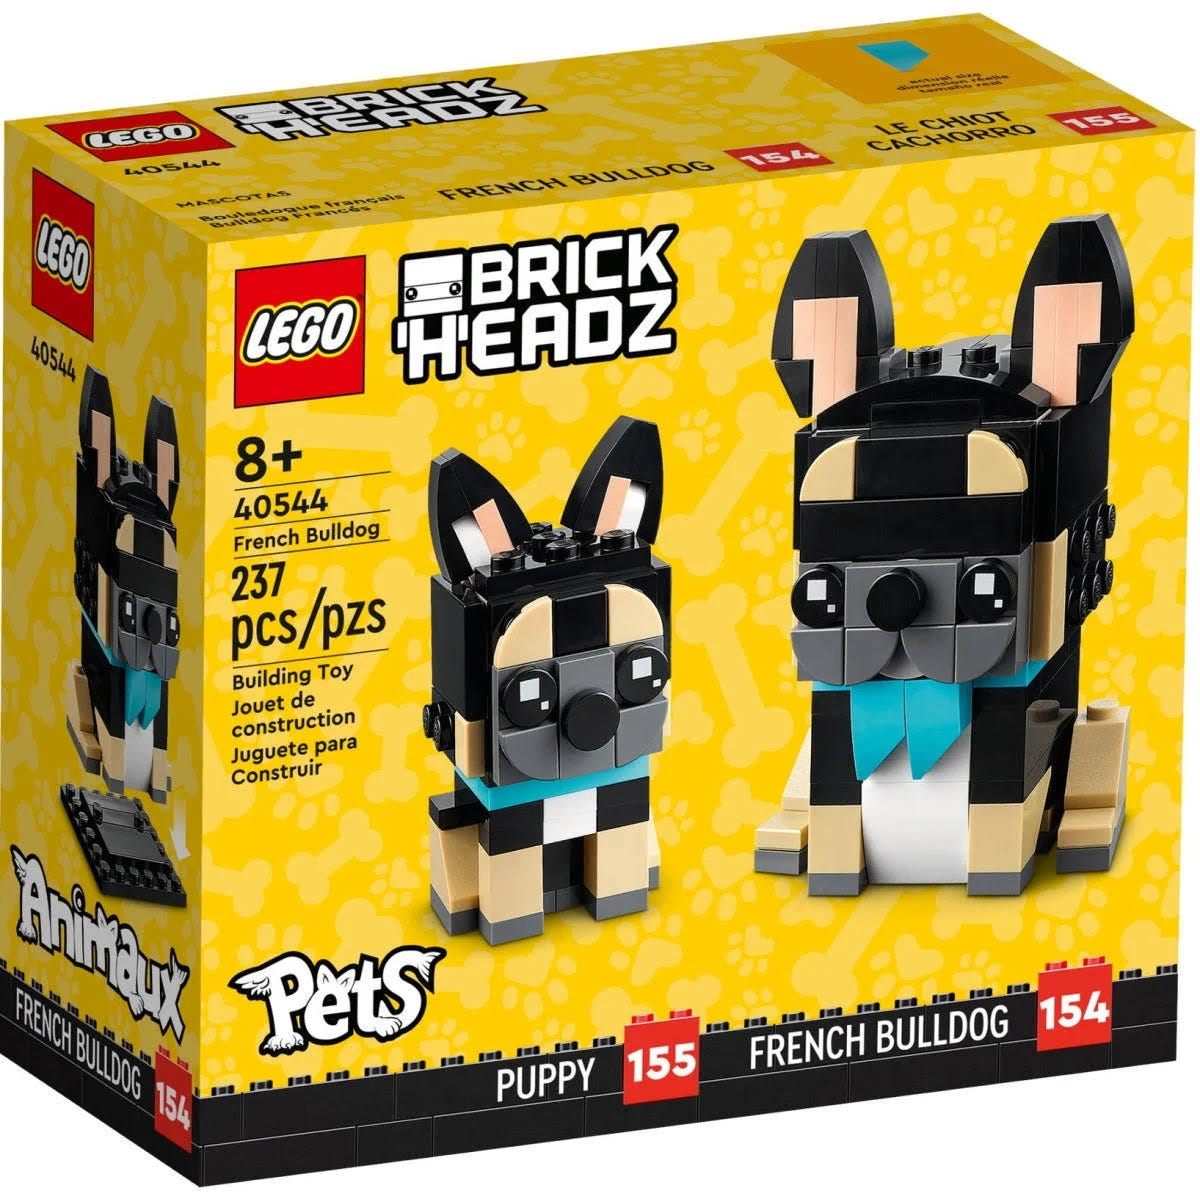 Build-Your-Own Lego Brickheadz French Bulldog | Image